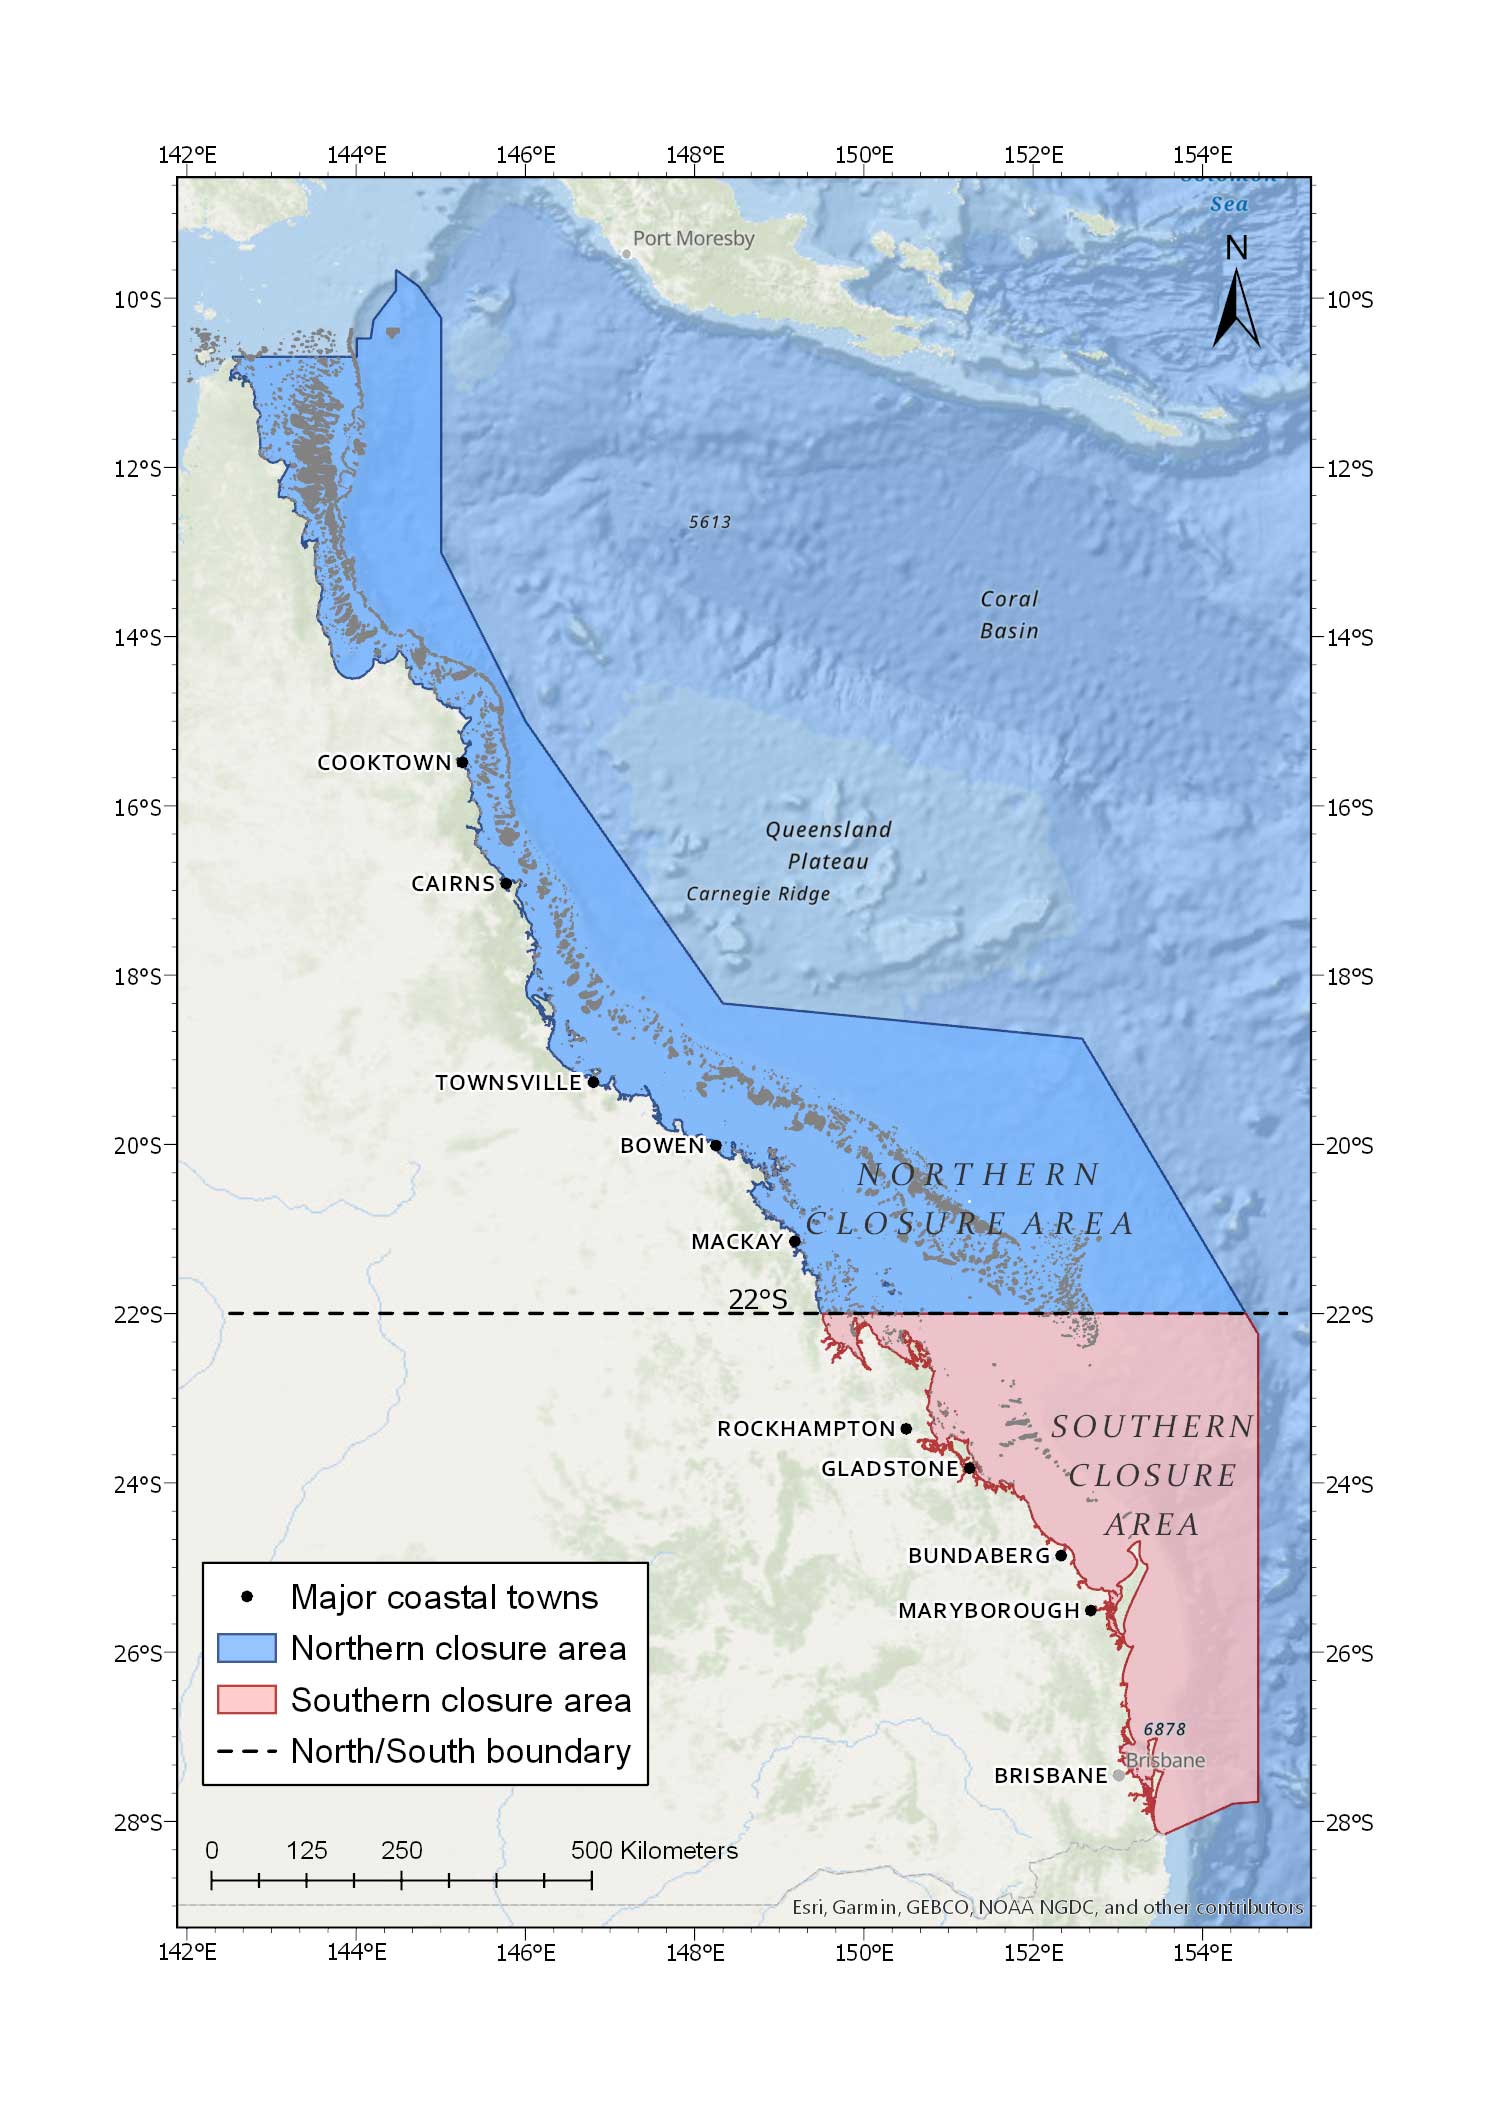 East coast Spanish mackerel closure areas